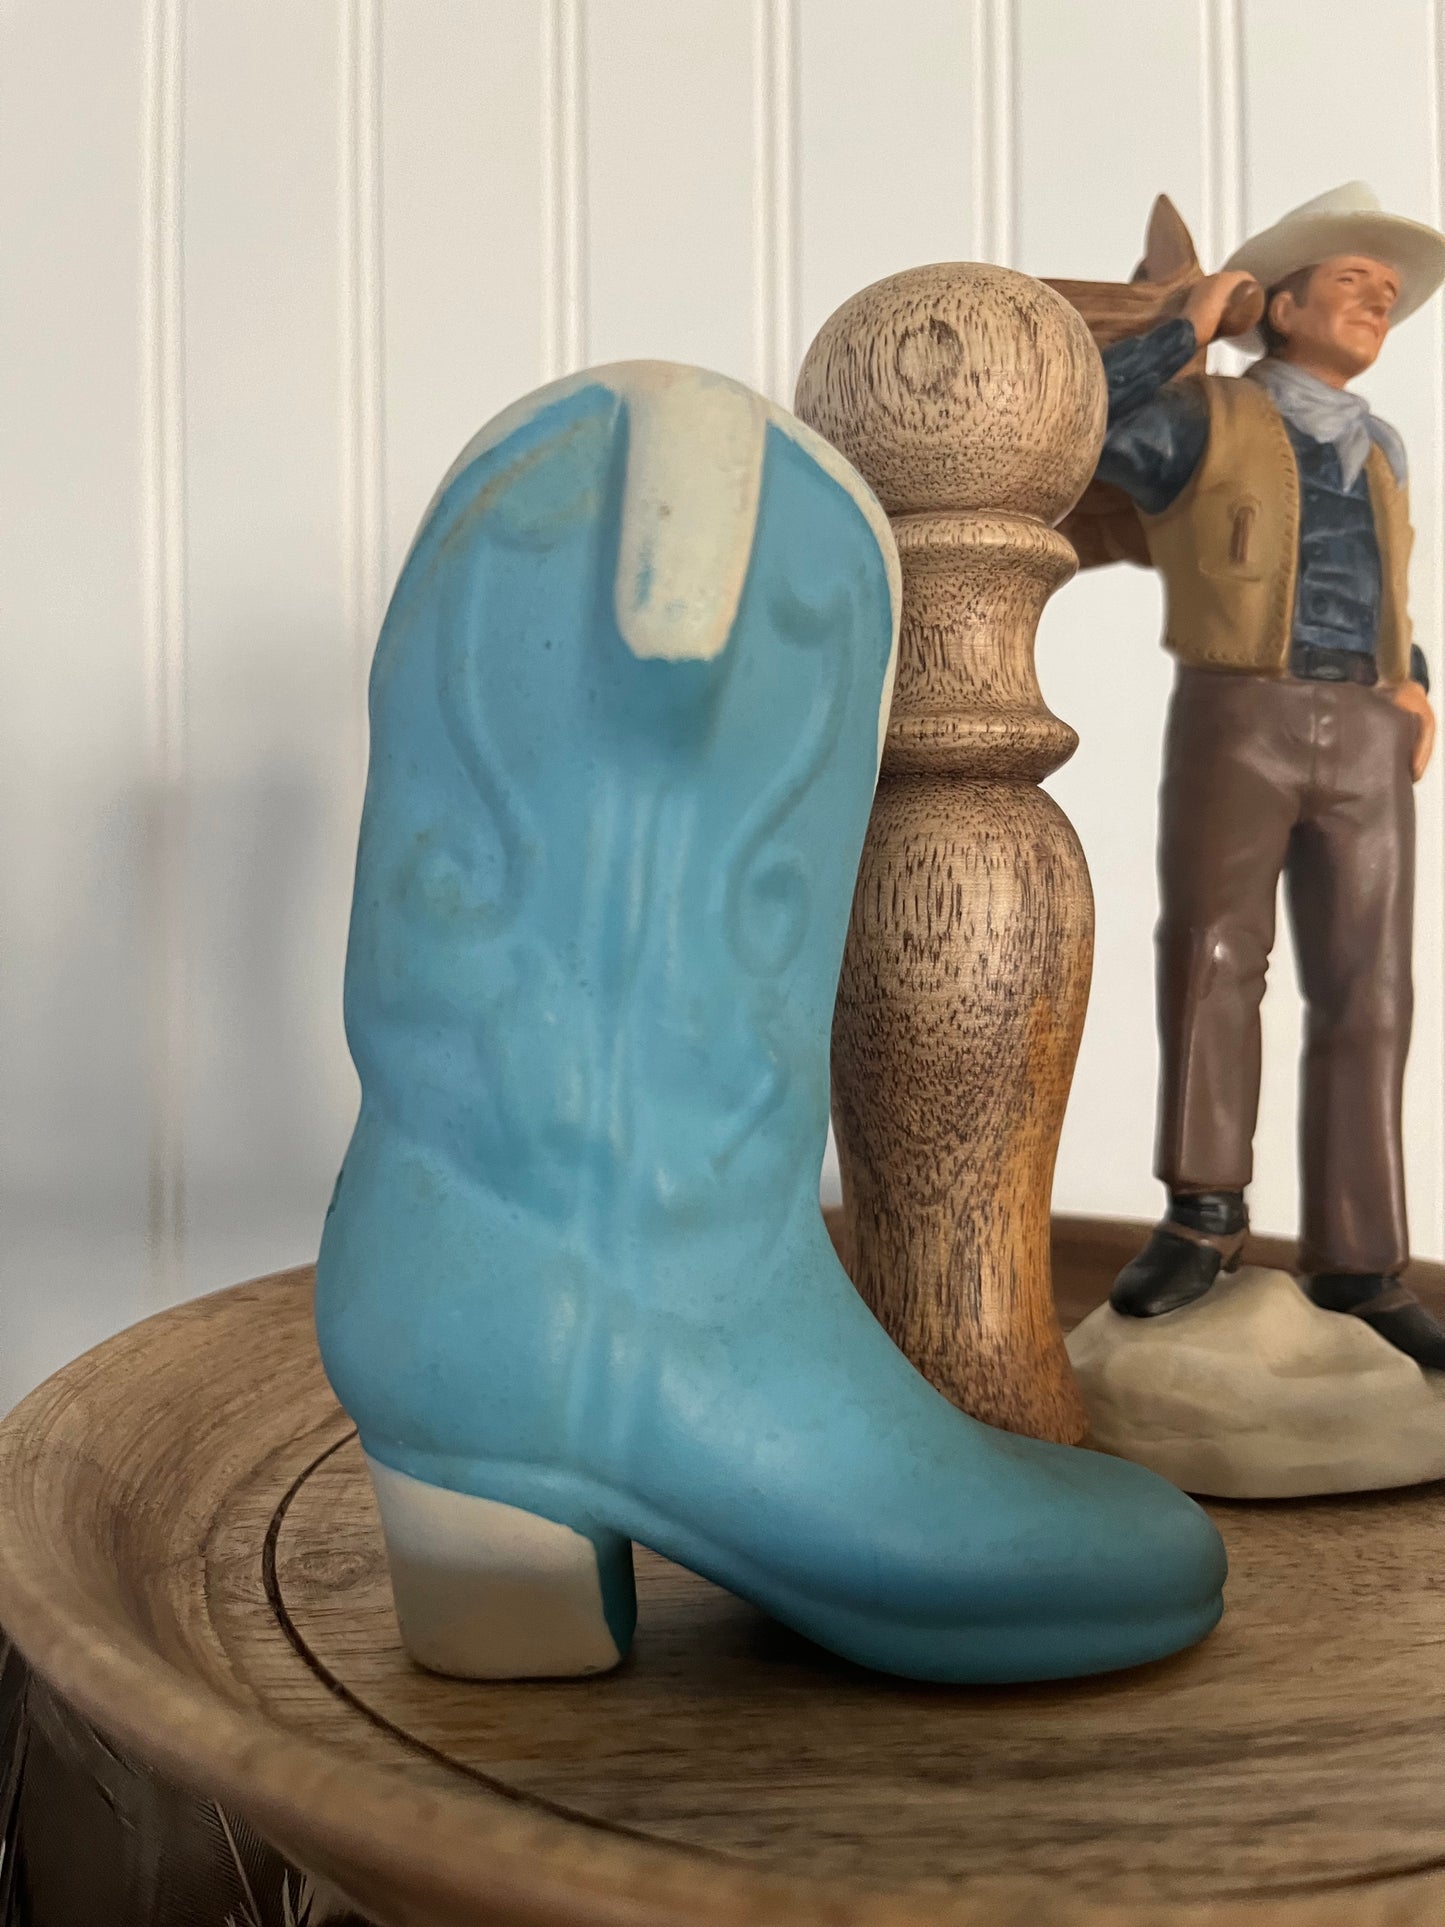 Small Vintage Hand-Painted Ceramic Western Cowboy Boot Figurine Vase - 4” Deep x 5” High